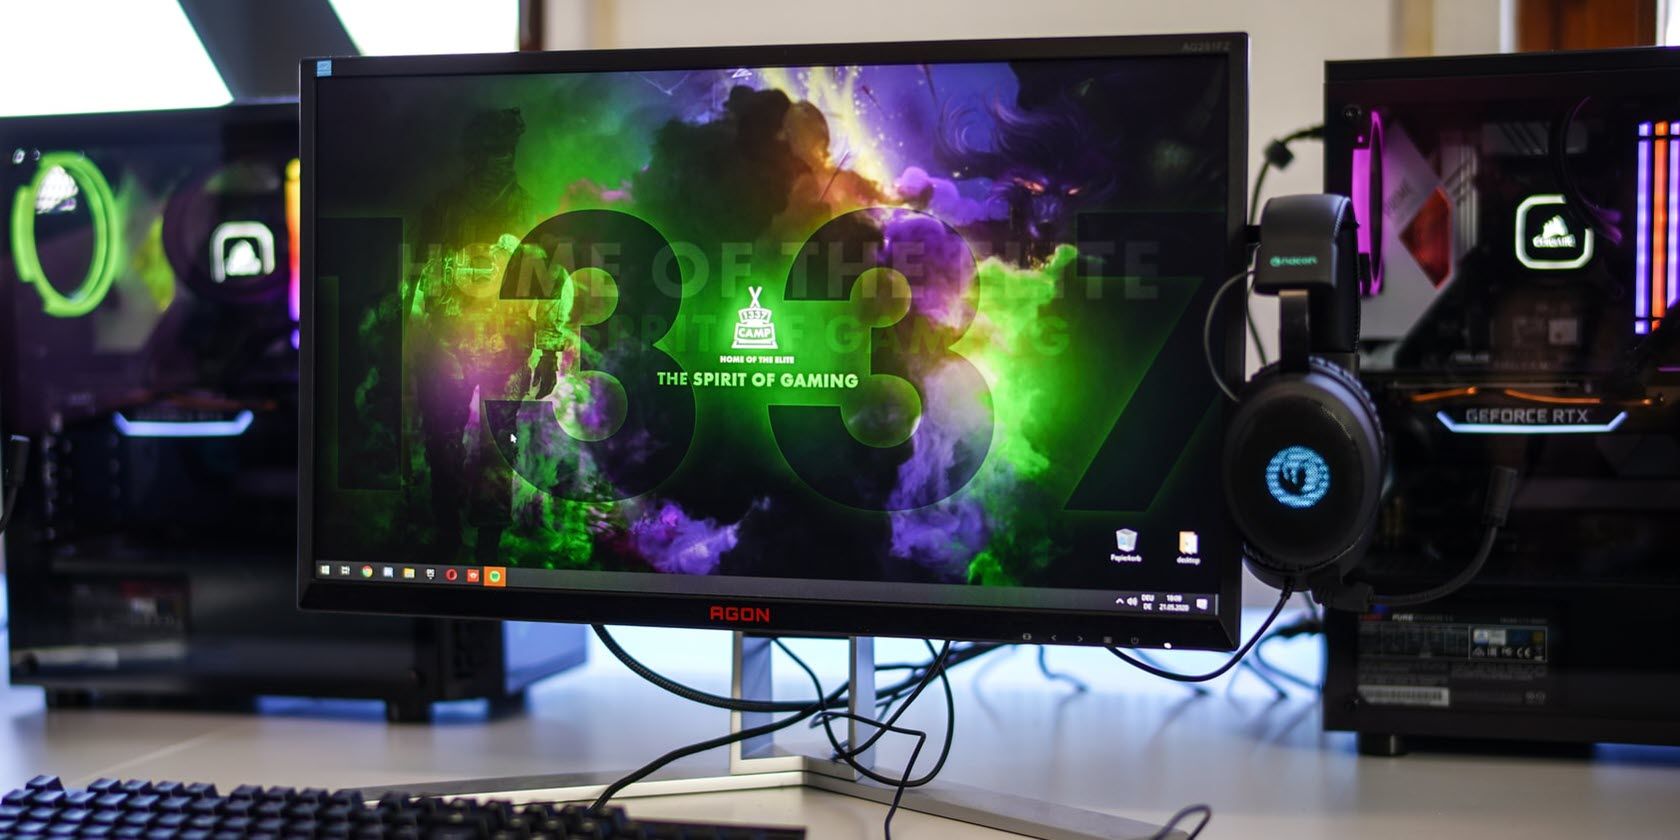 Agon monitor with Windows desktop screen